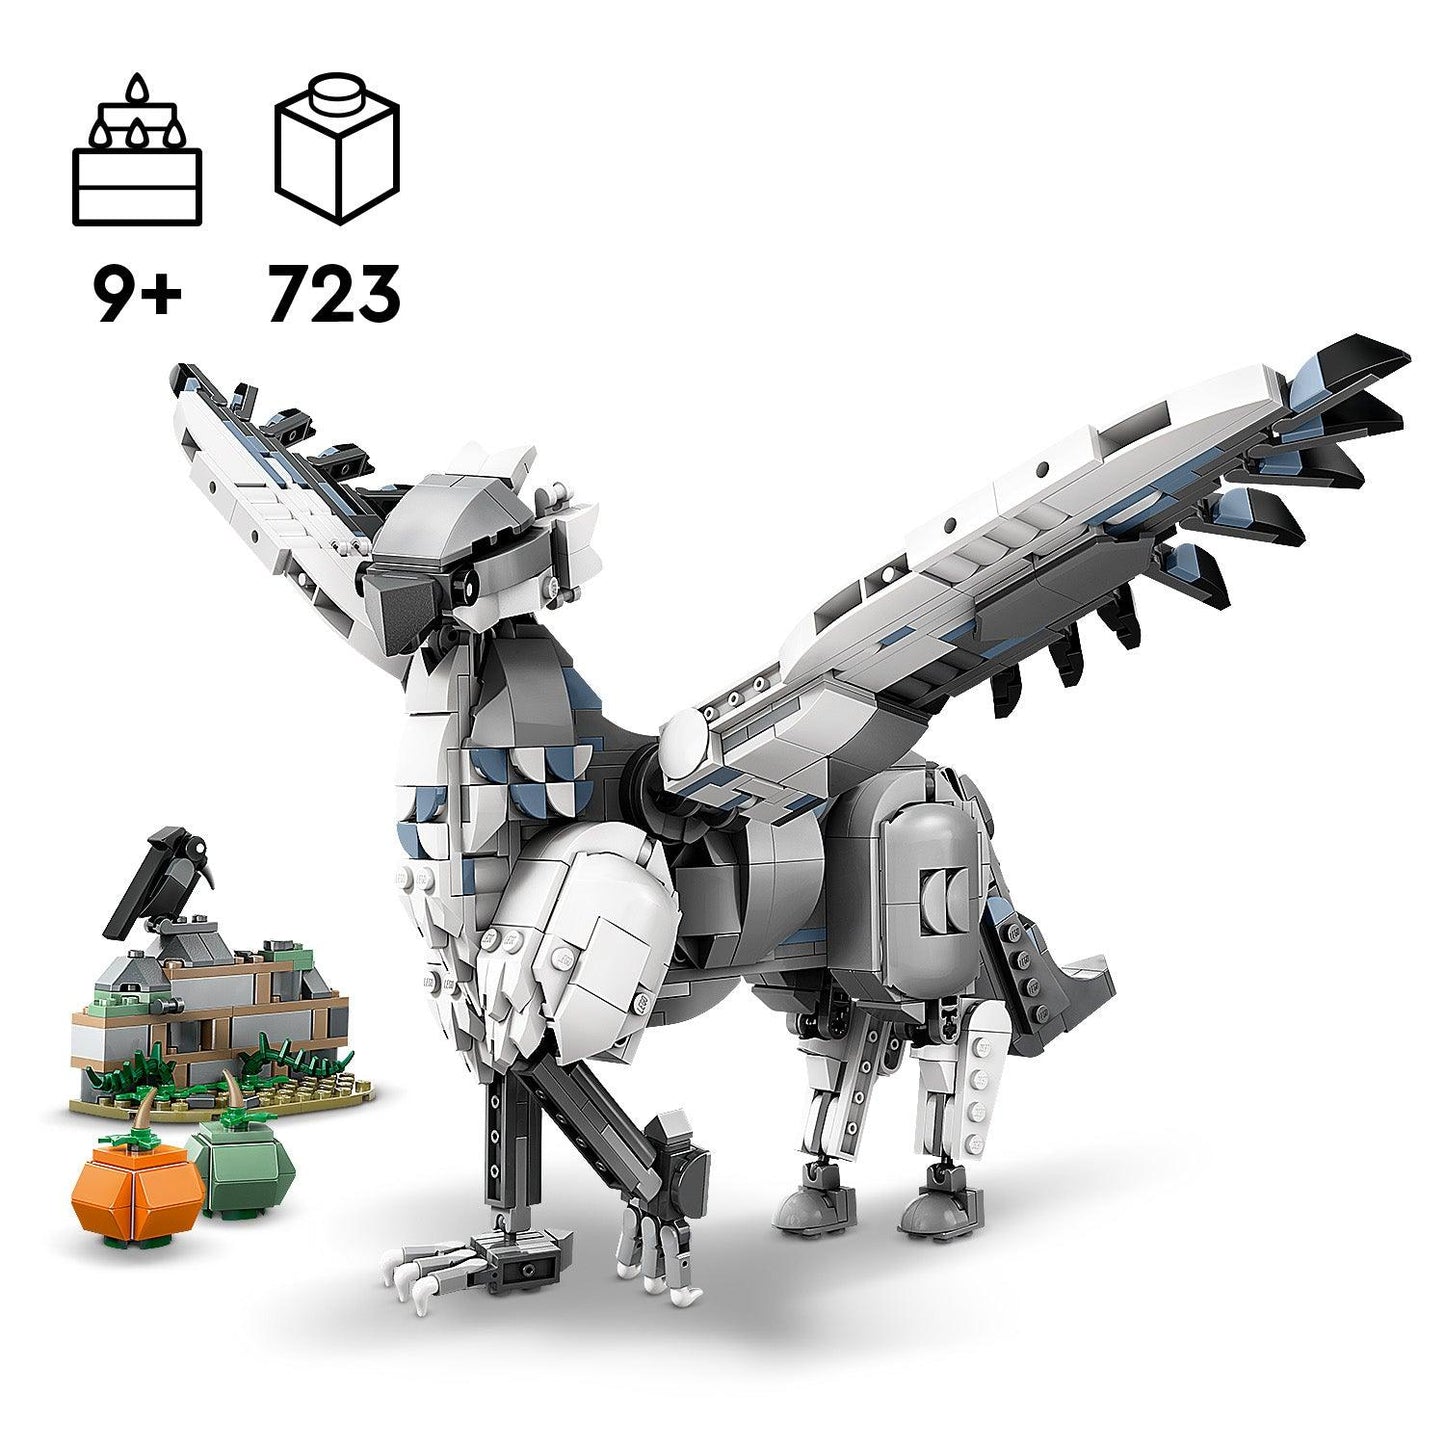 LEGO Scheurbek 76427 Harry Potter (Pre-Order: verwacht juni) LEGO HARRY POTTER @ 2TTOYS LEGO €. 49.99